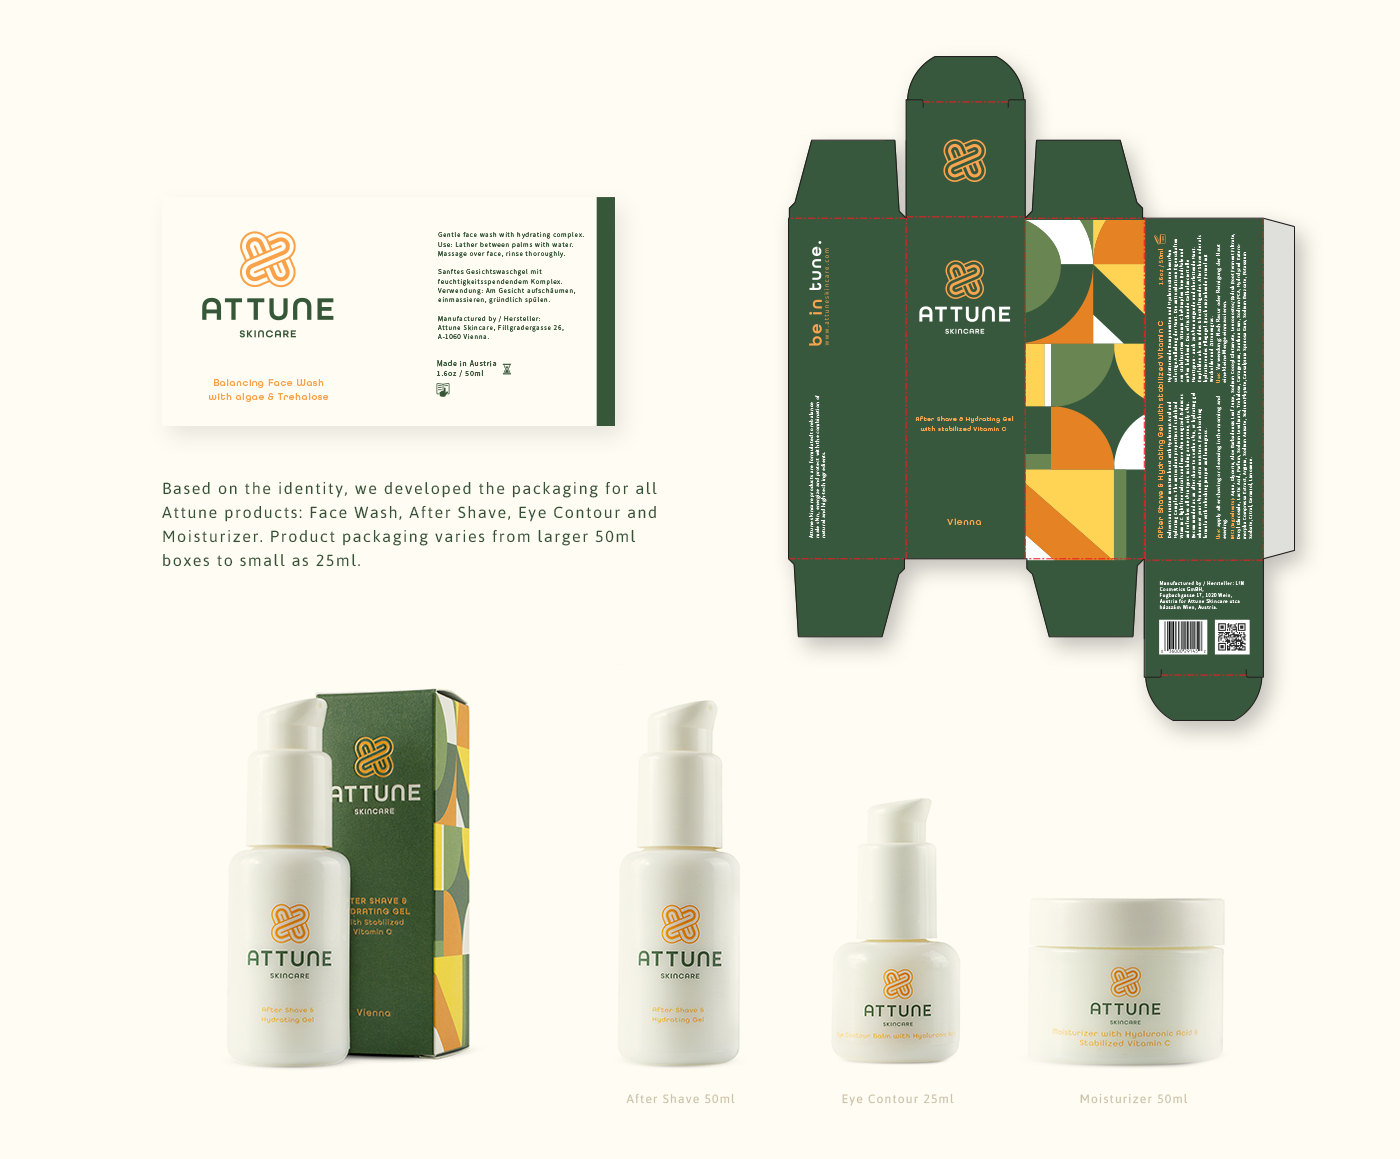 ATTUNE Skincare - Branding and Packaging